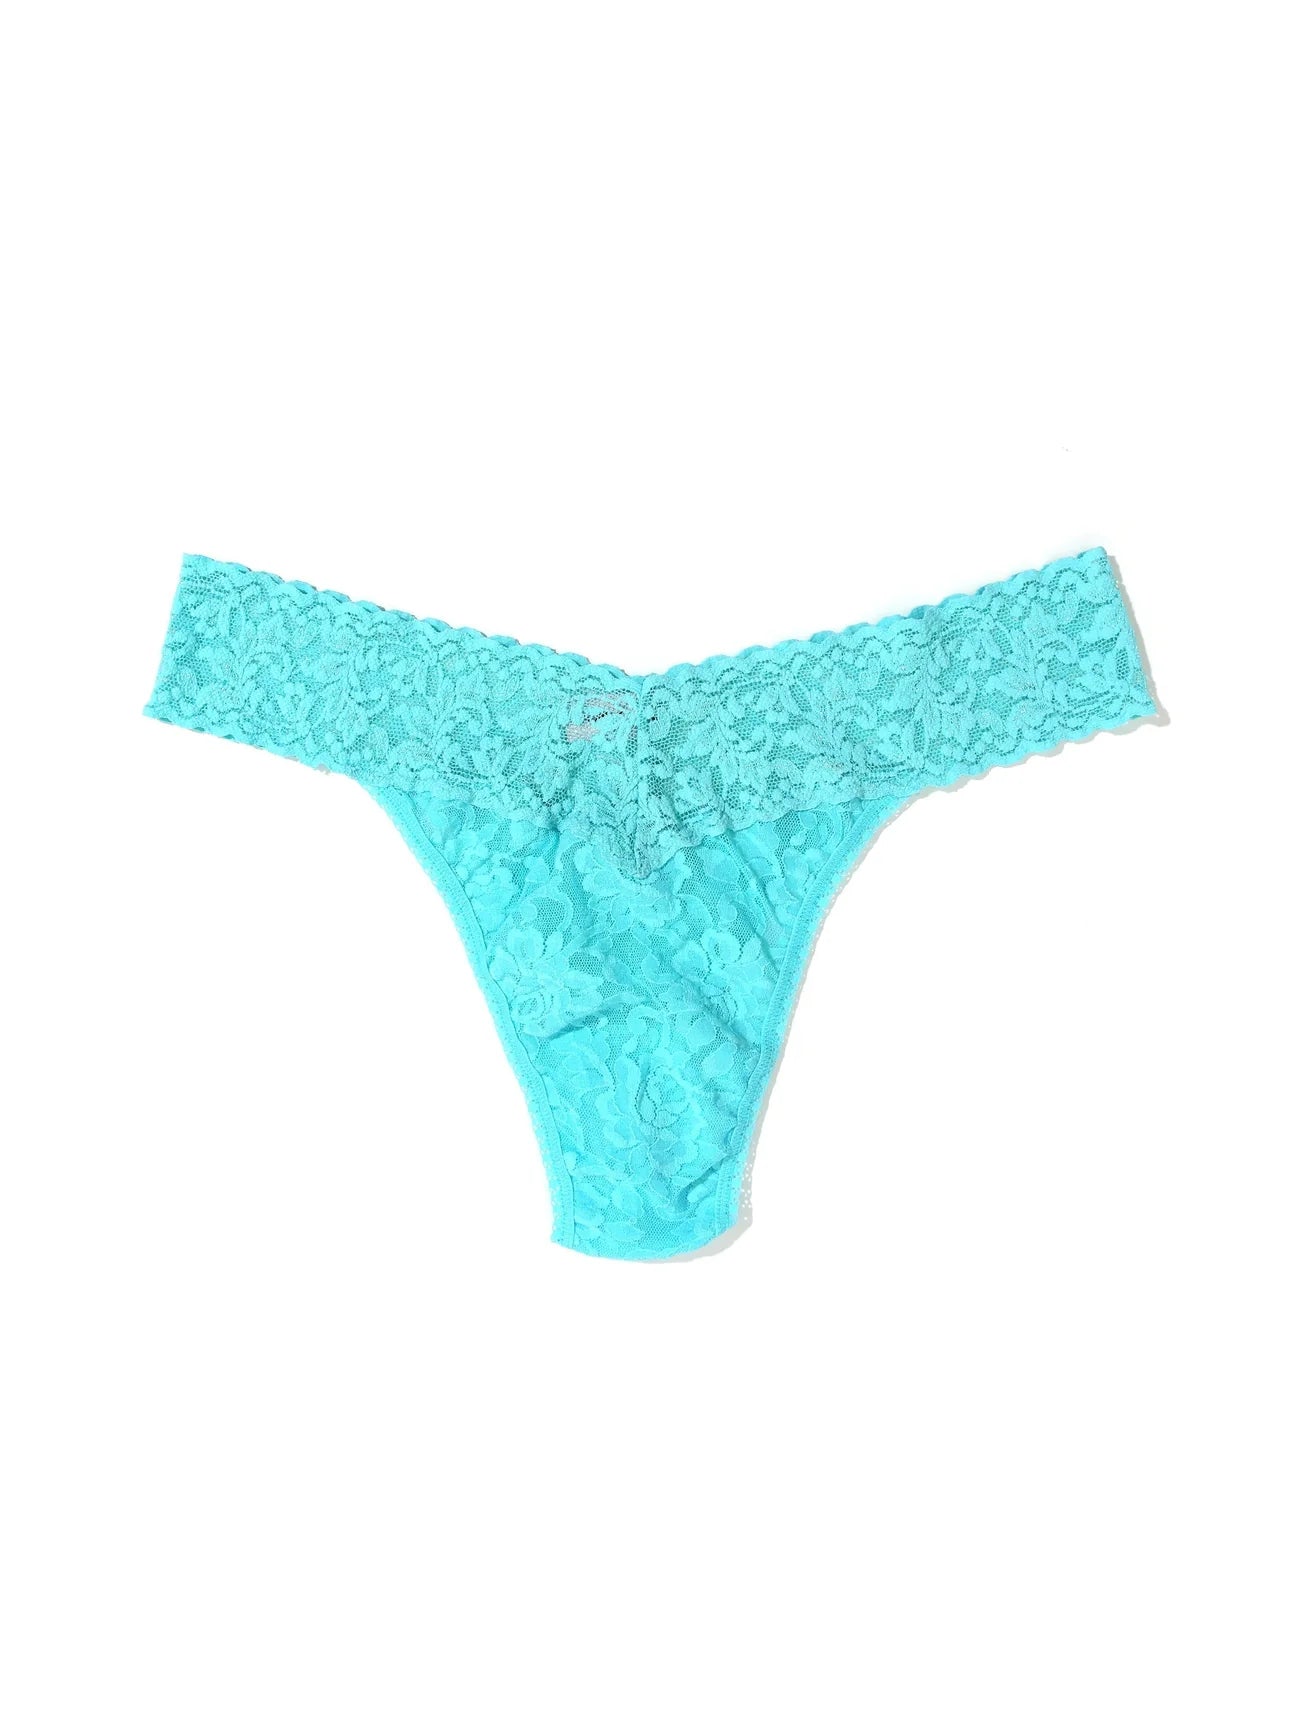 Buy aquatic-blue Hanky Panky Signature Lace Original Rise Thong-Packaged 4811p